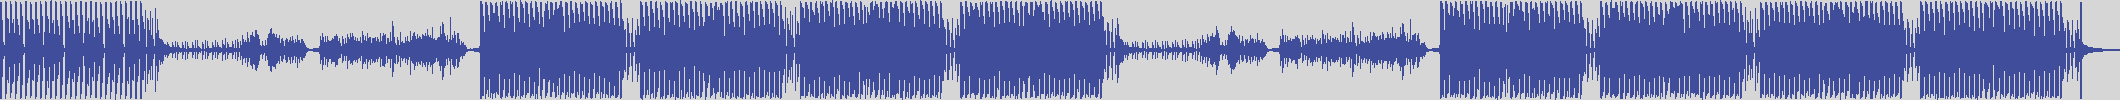 nf_boyz_records [NFY036] Ingo Lassort - Stella Crescente [House Mix] audio wave form